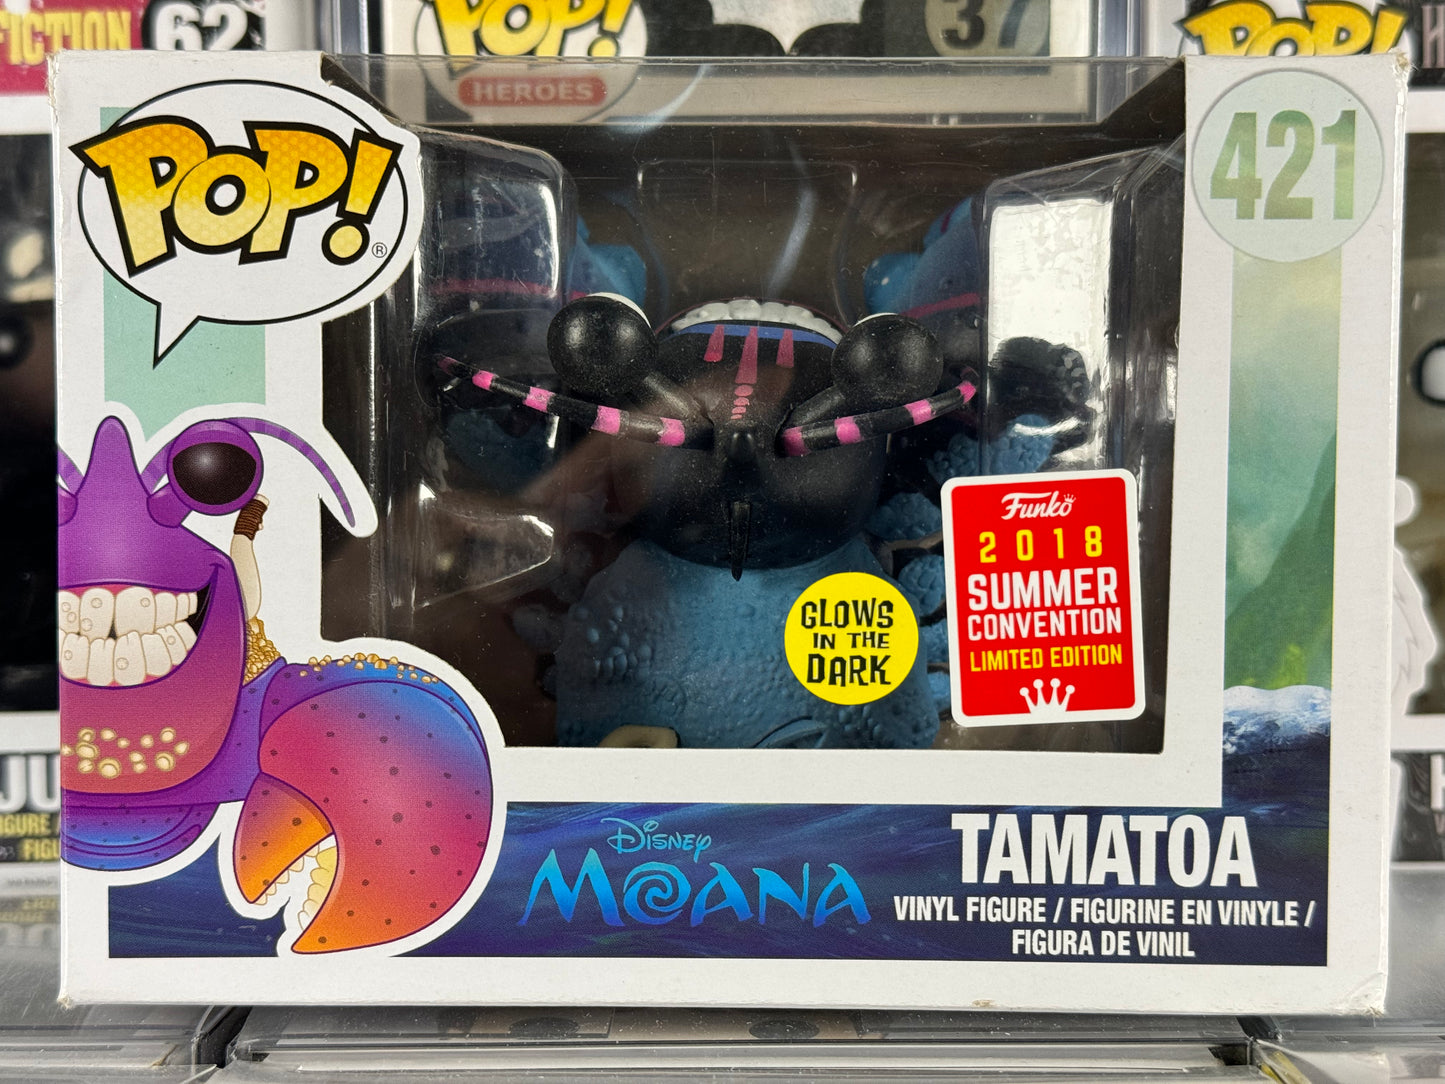 Disney Moana - Tamatoa (Neon) (Glow in the Dark) (421) Vaulted 2018 Summer Convention Exclusive